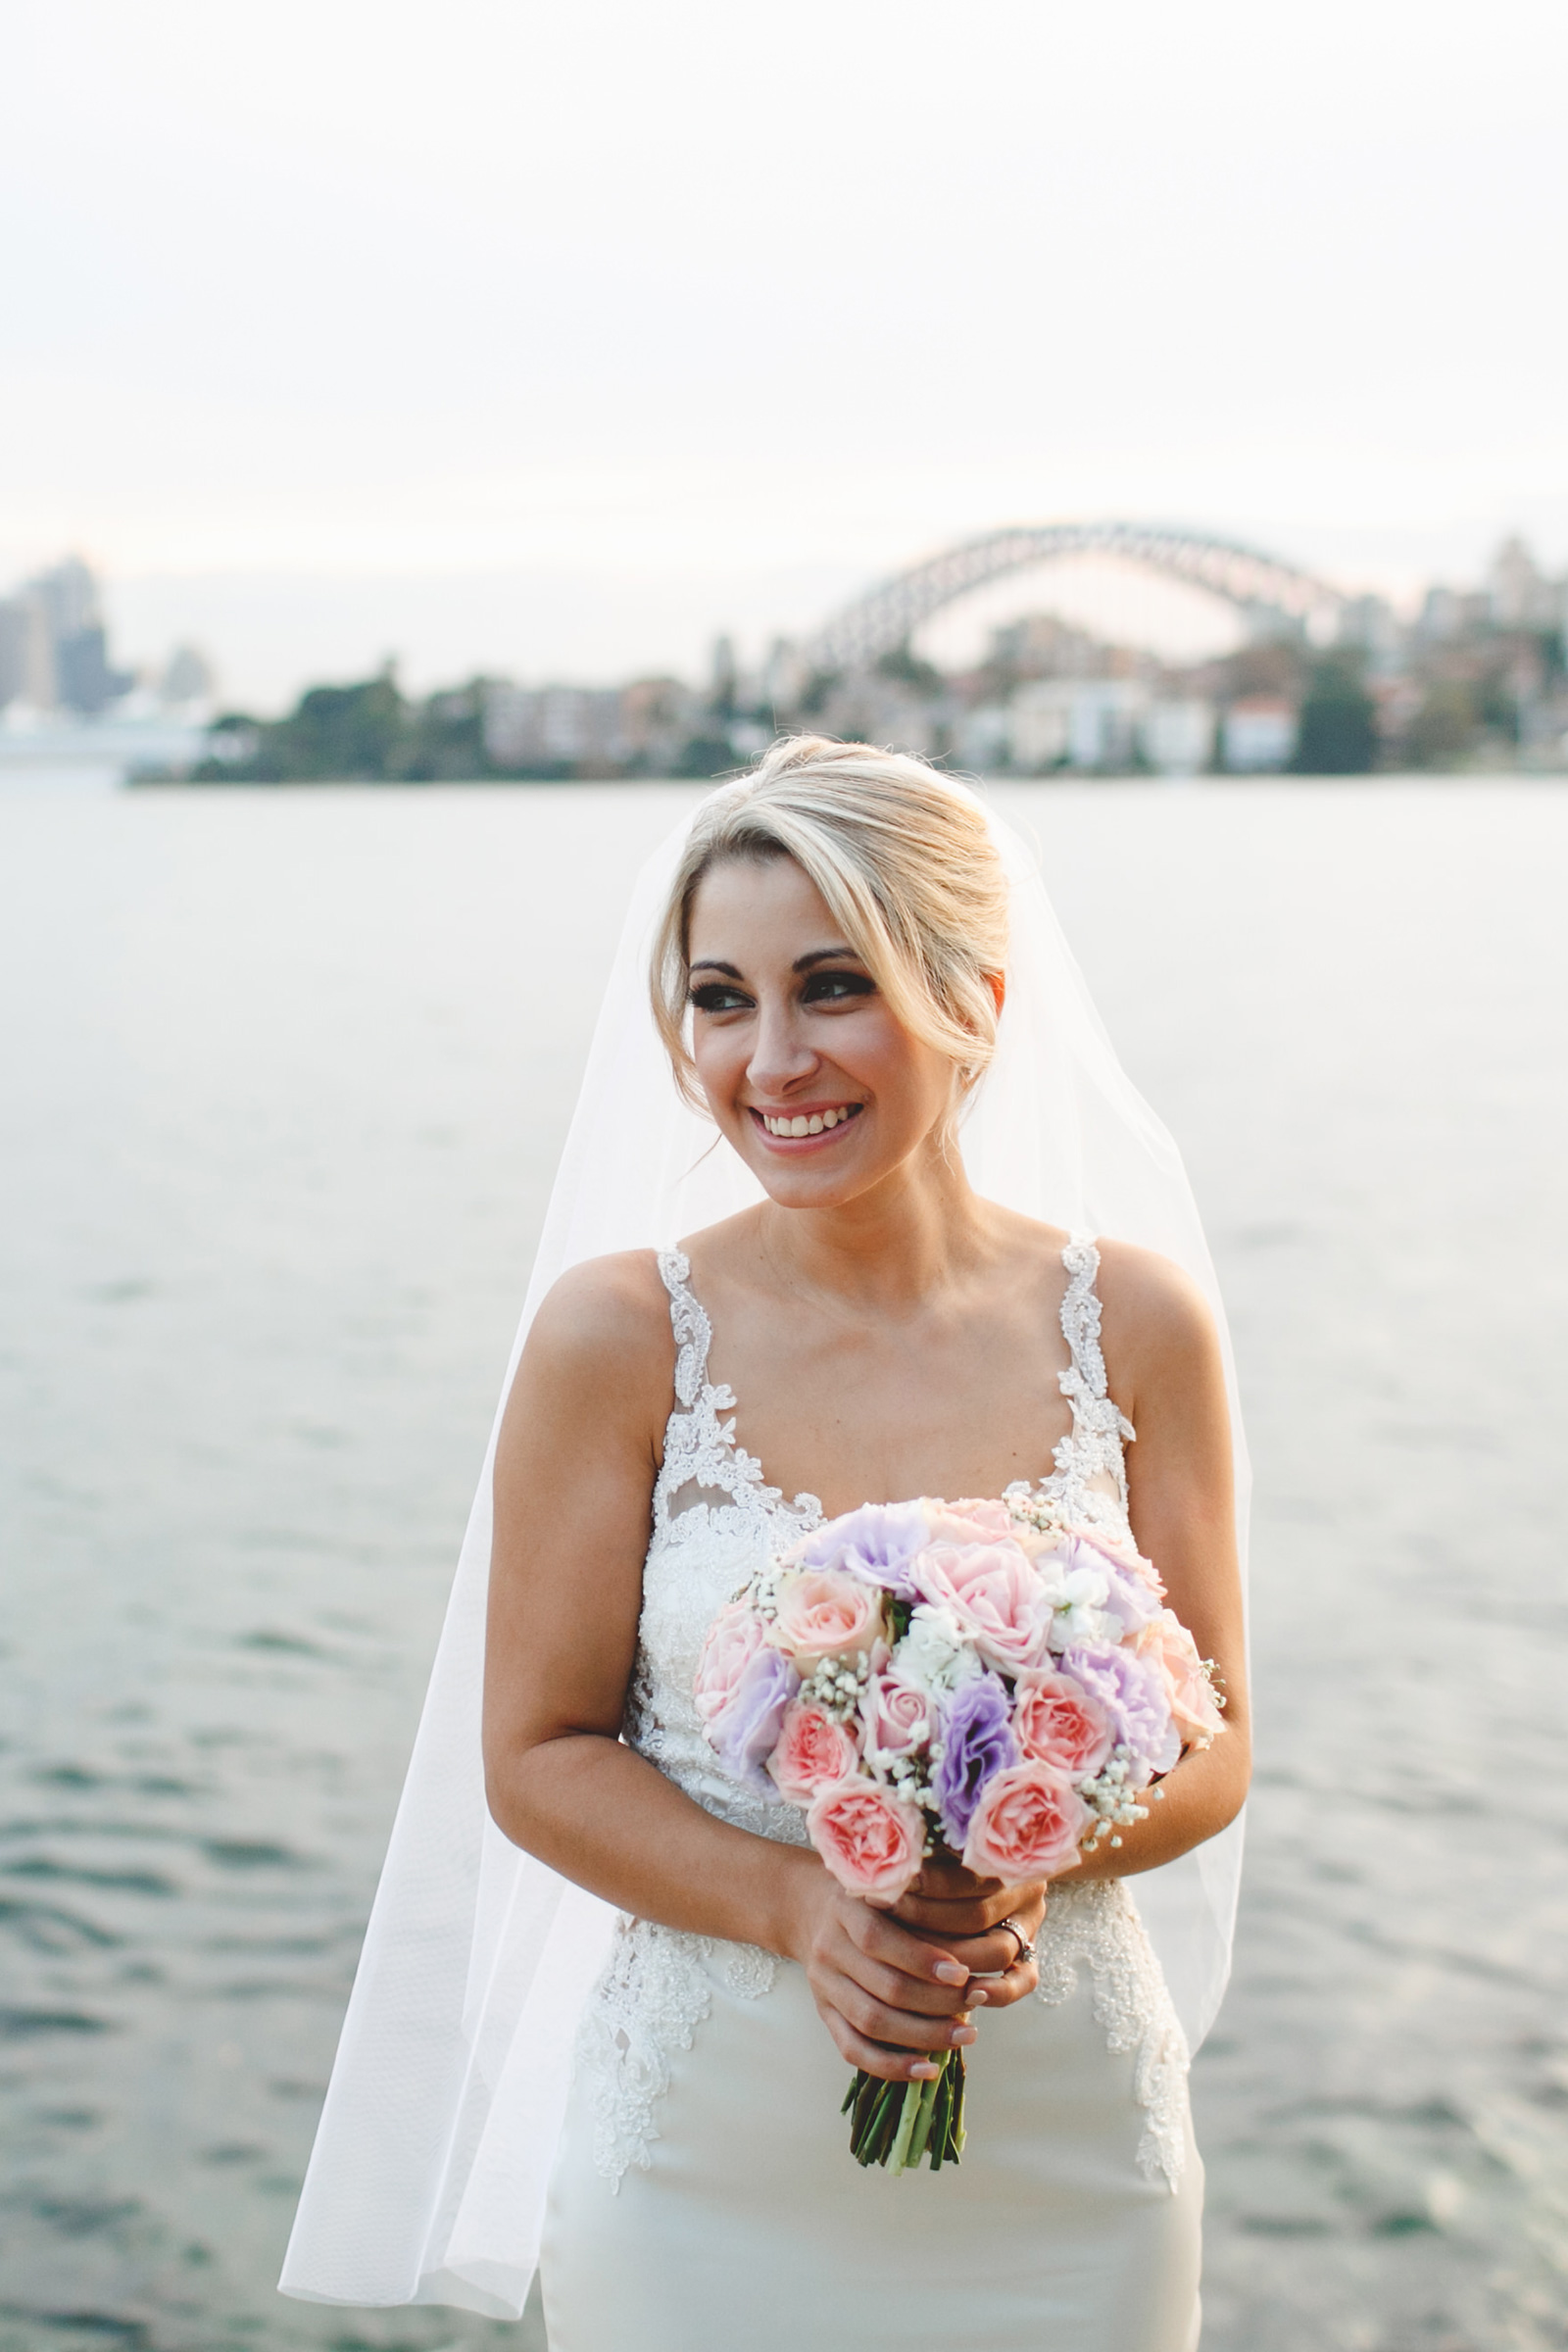 Rachael_Alex_Rustic-Waterfront-Wedding_SBS_011